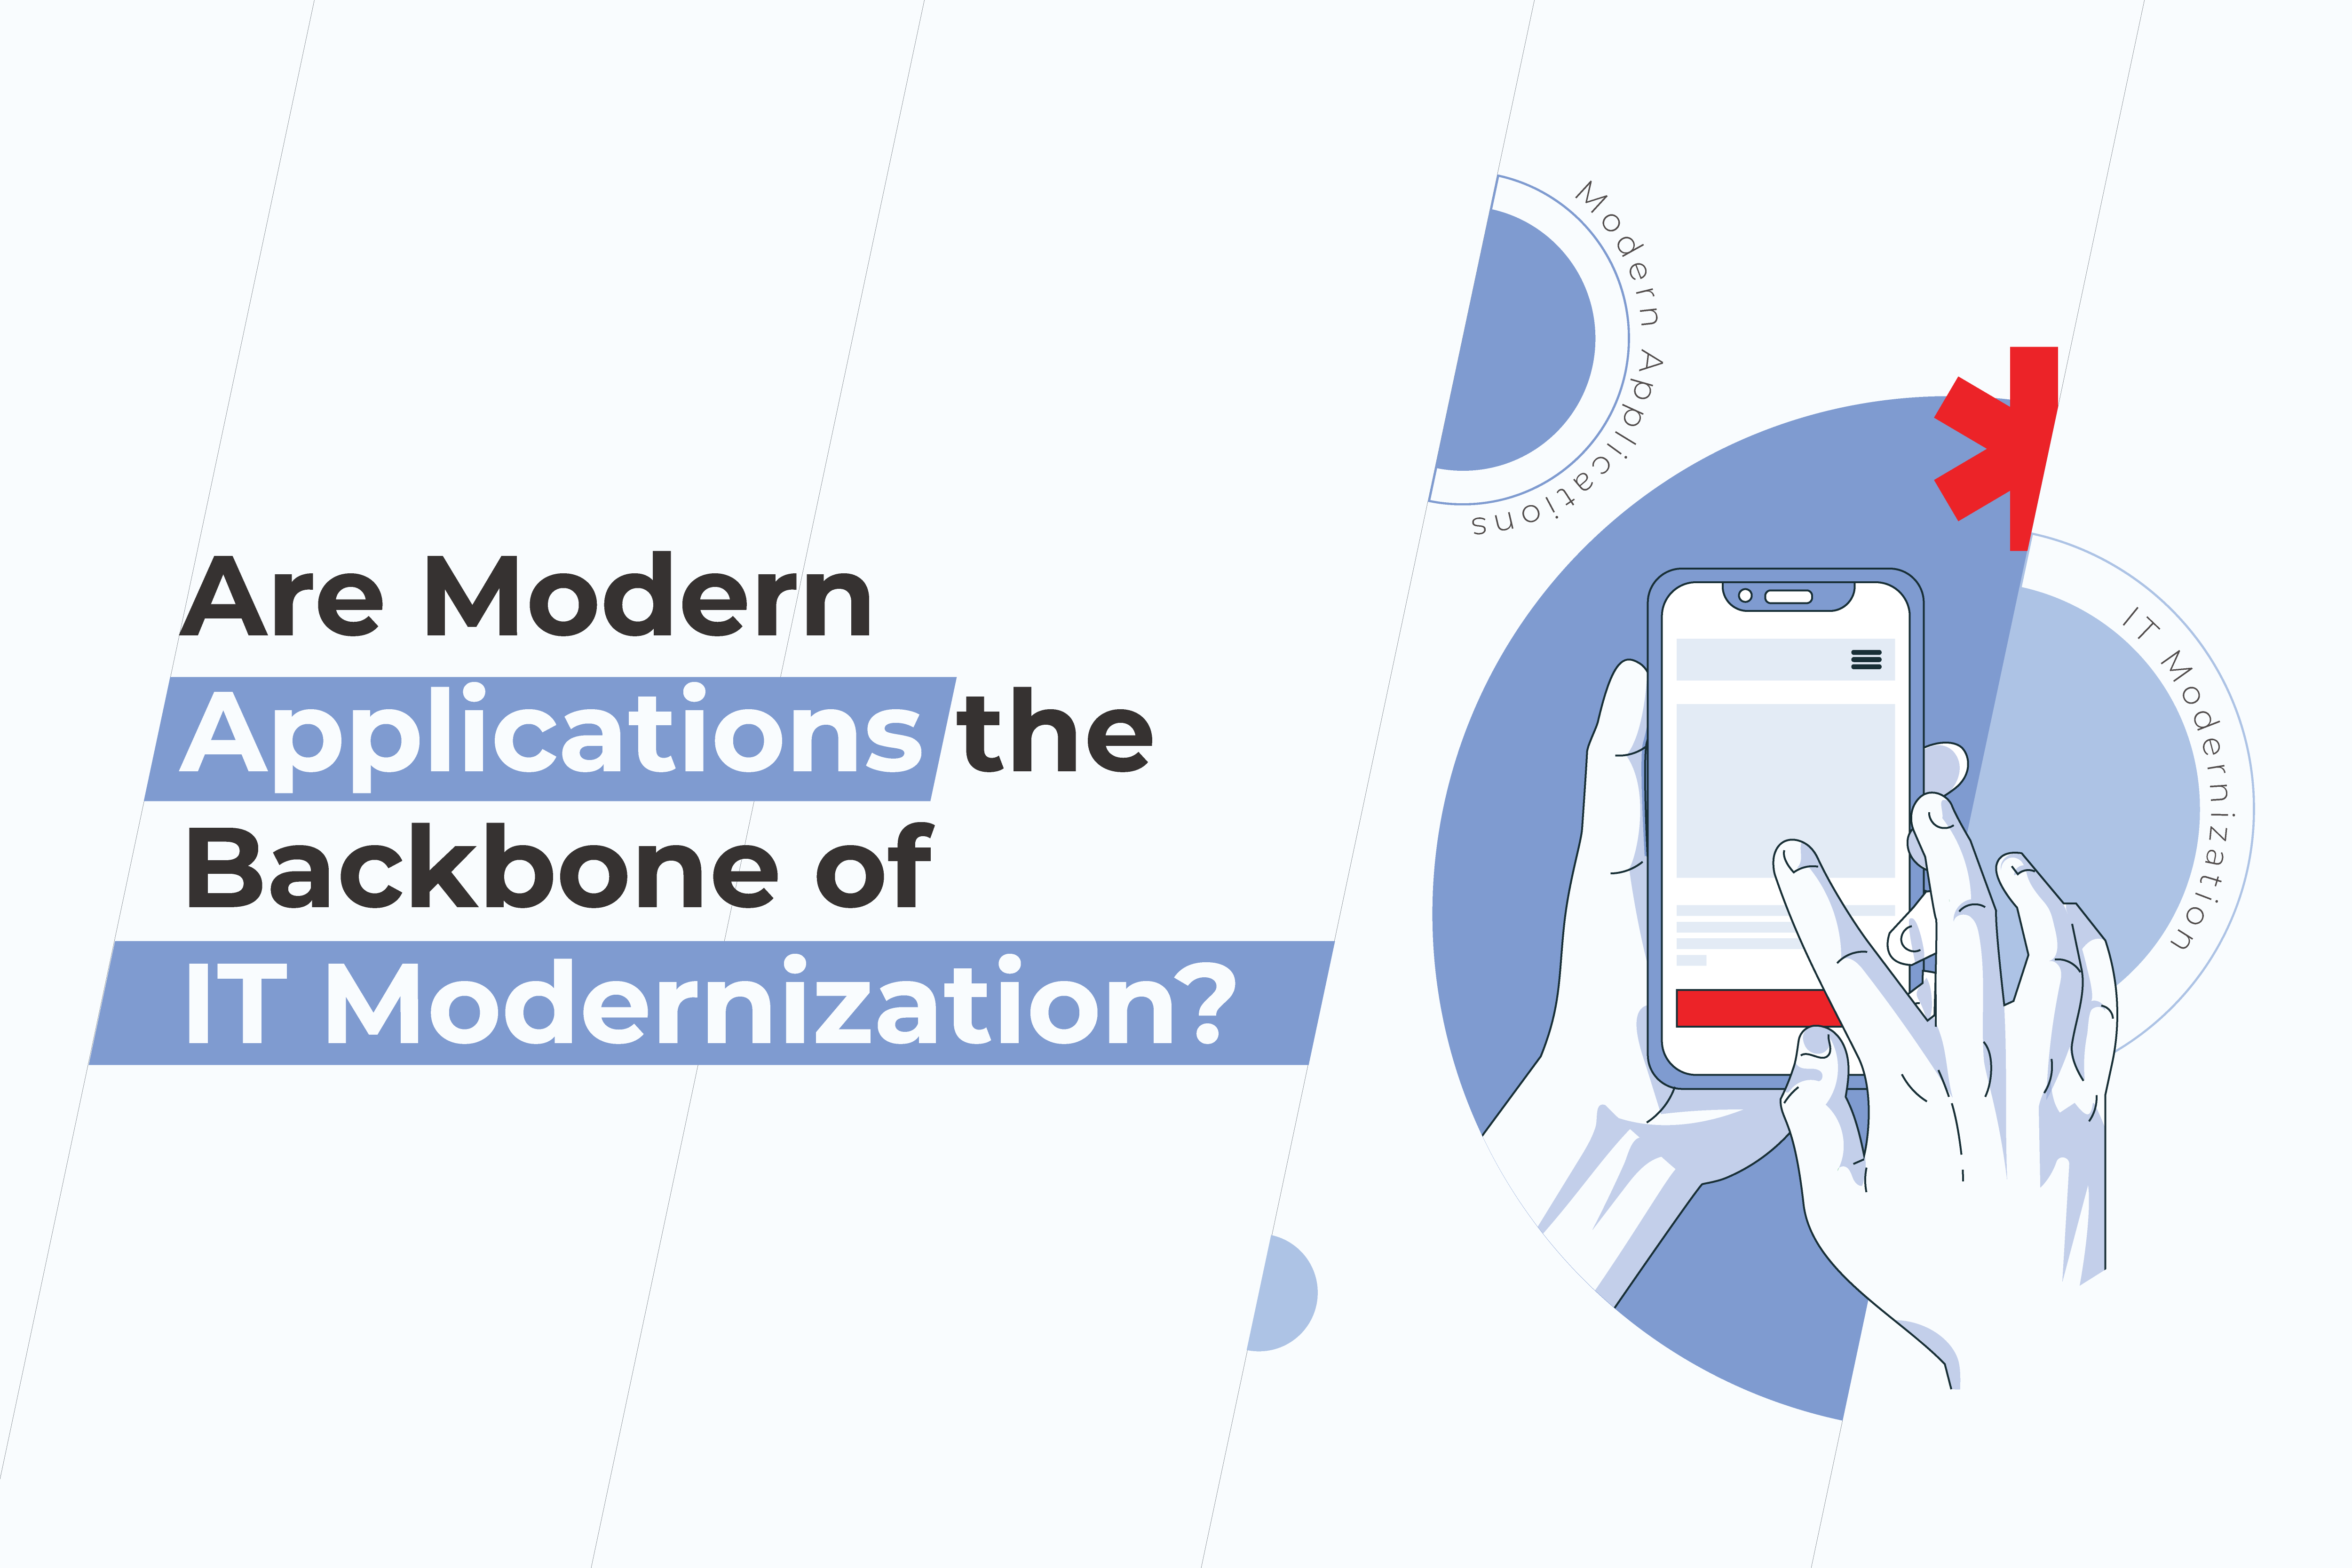 Are Modern Applications the Backbone of IT Modernization?